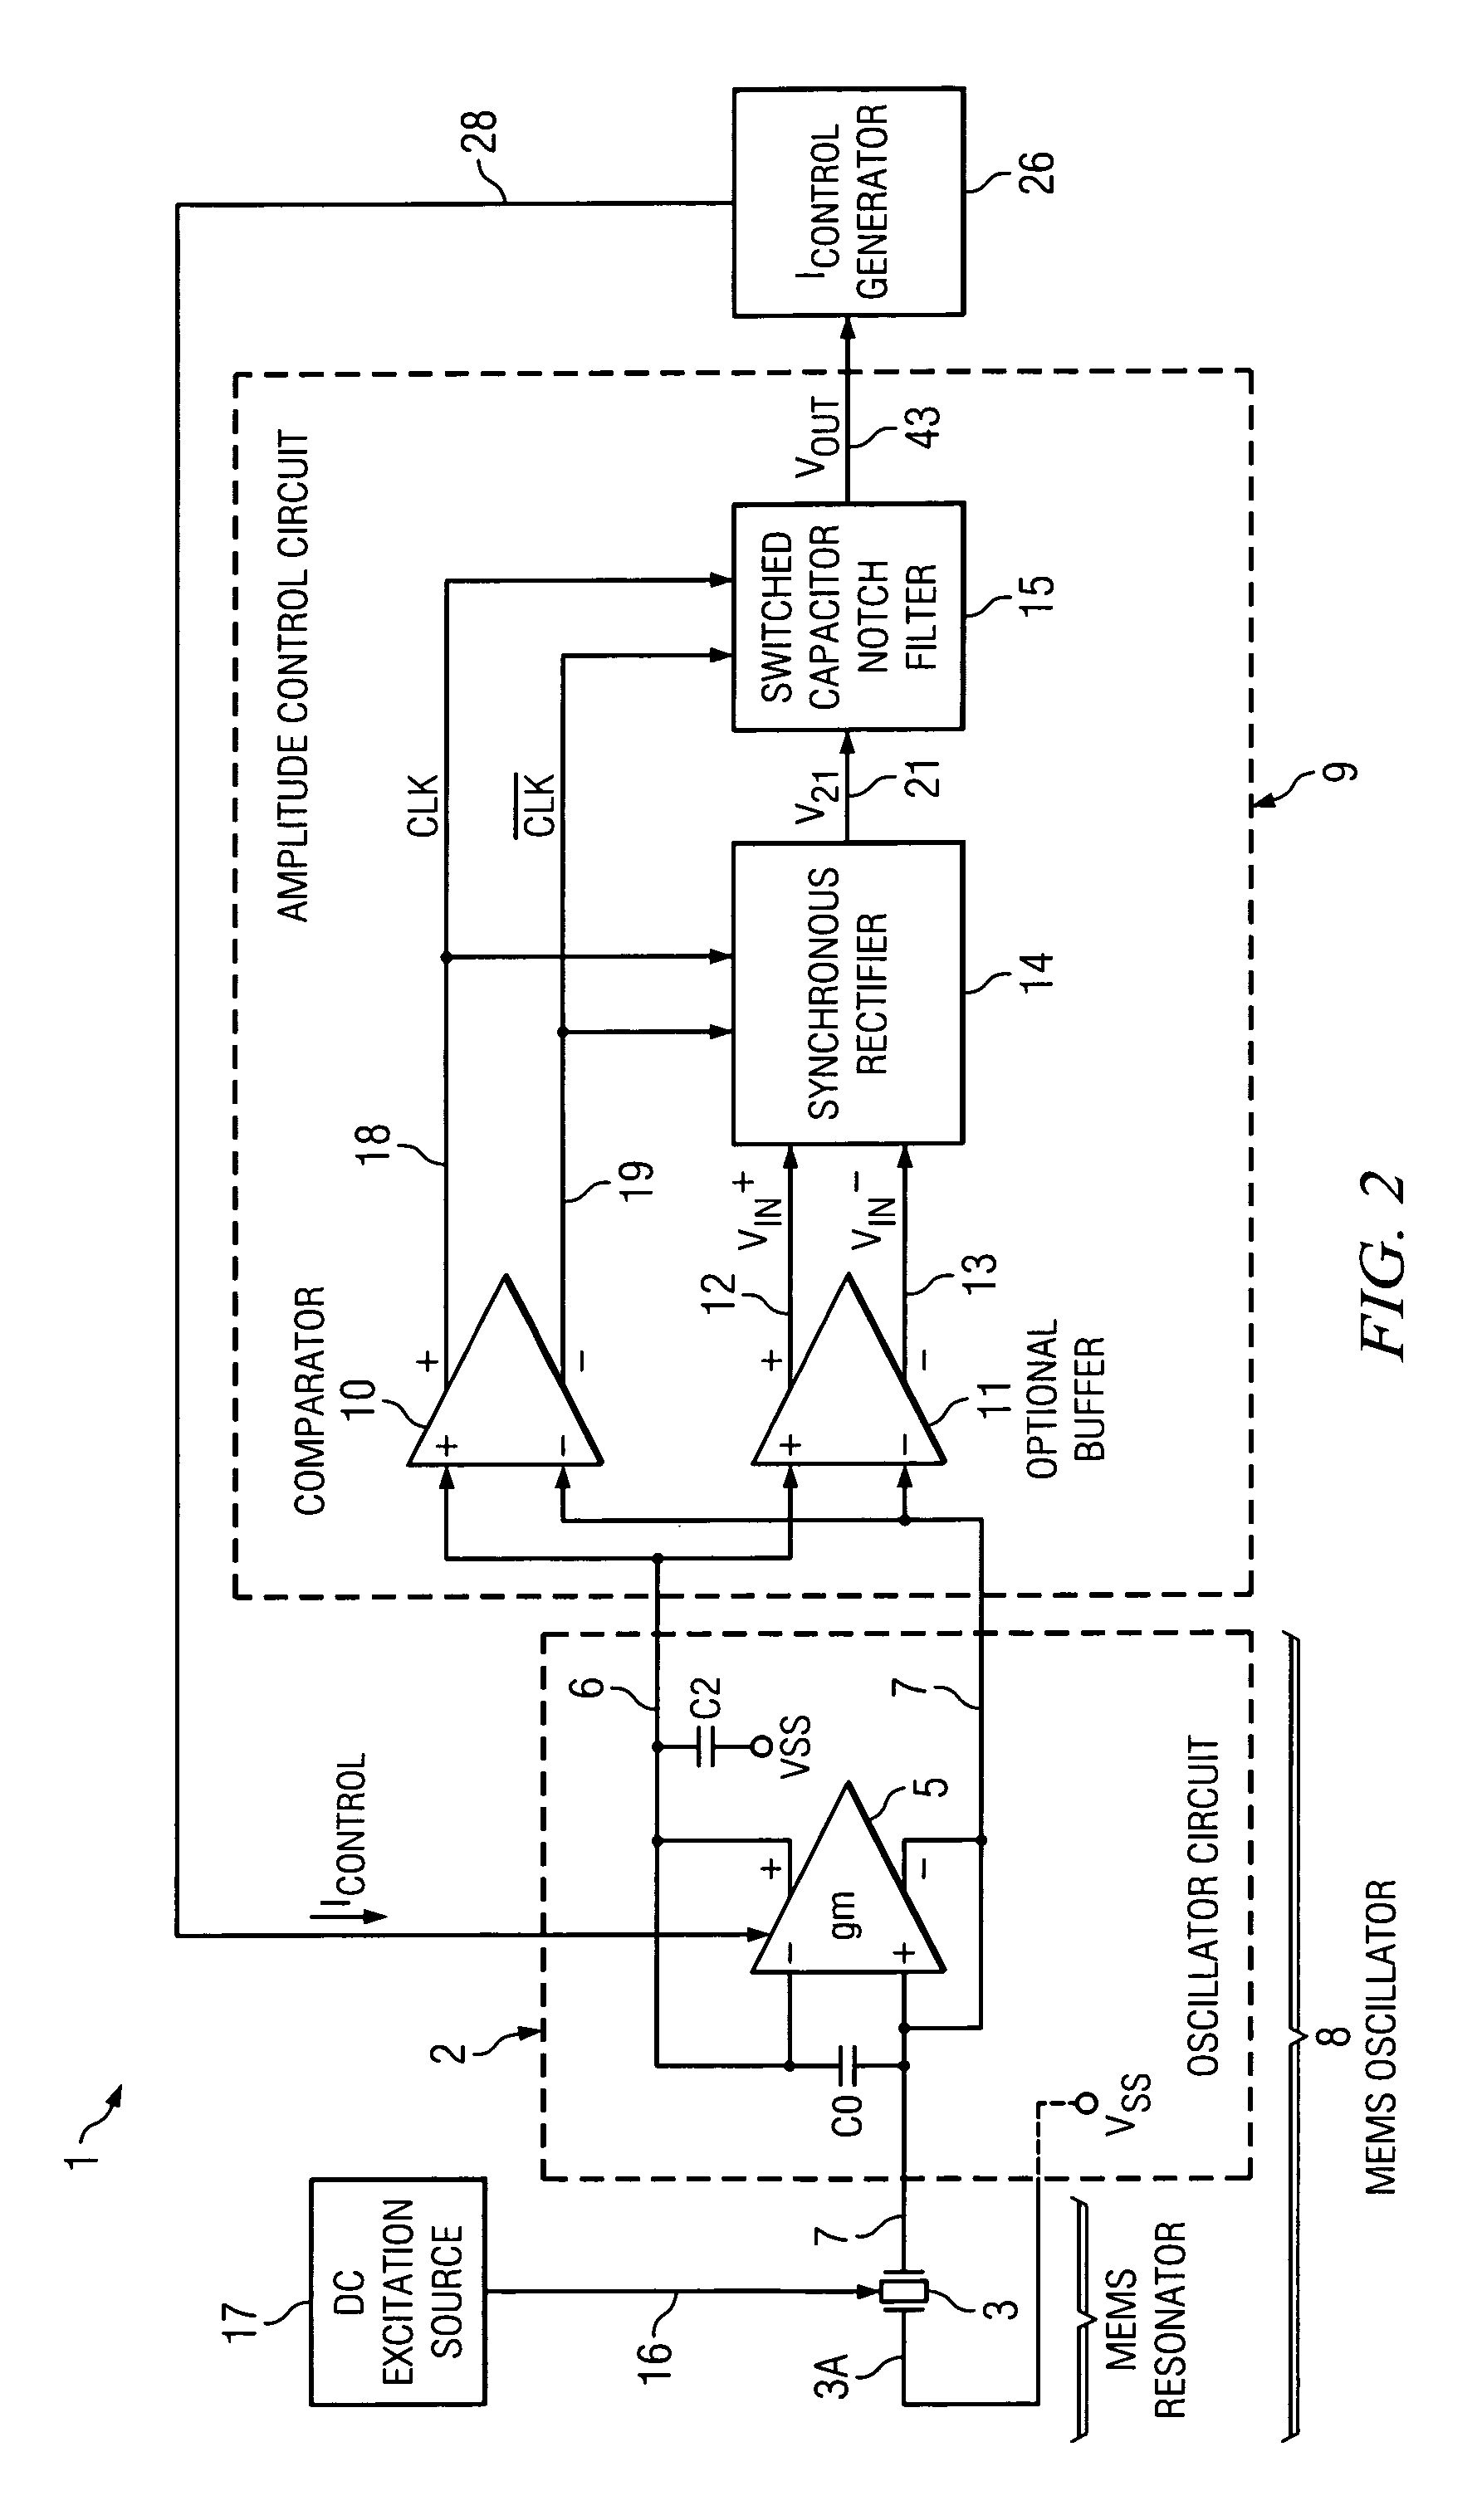 Circuitry and method for precision amplitude control in quartz and MEMS oscillators